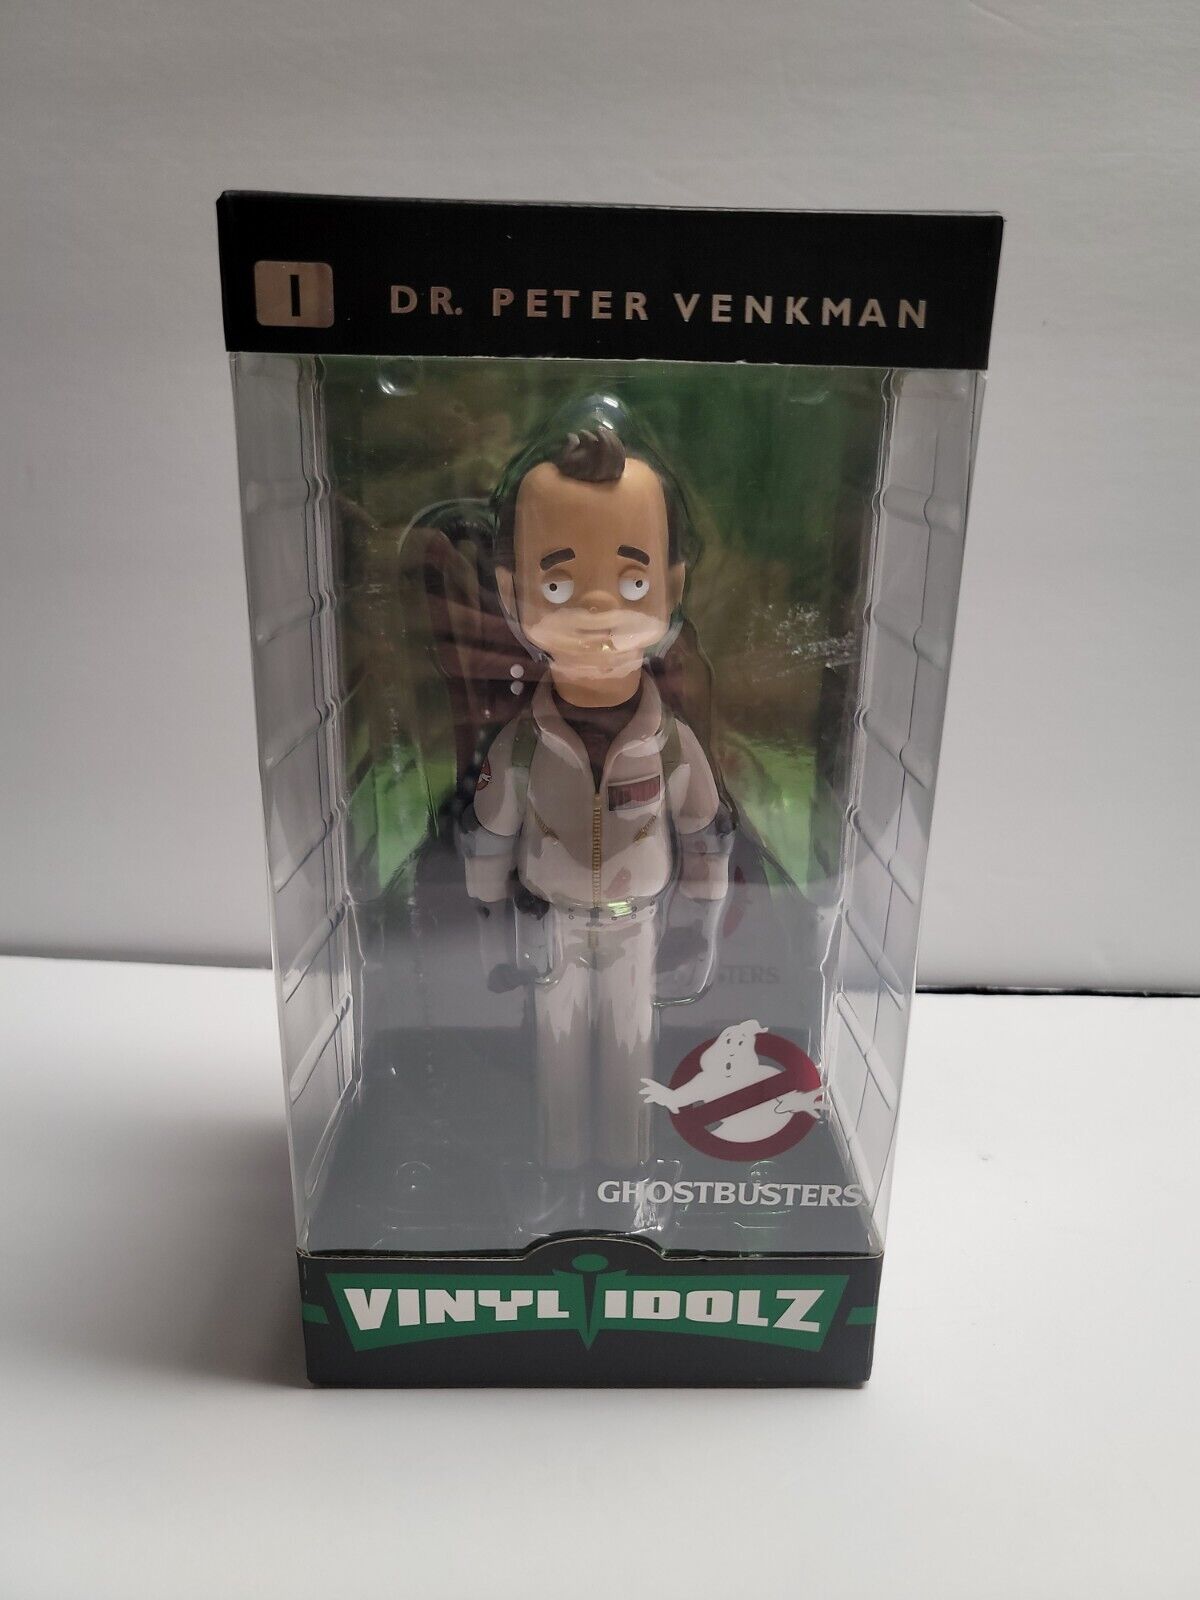 Ghostbusters Vinyl Idolz Dr. Peter Venkman 8-Inch Vinyl Figure #1